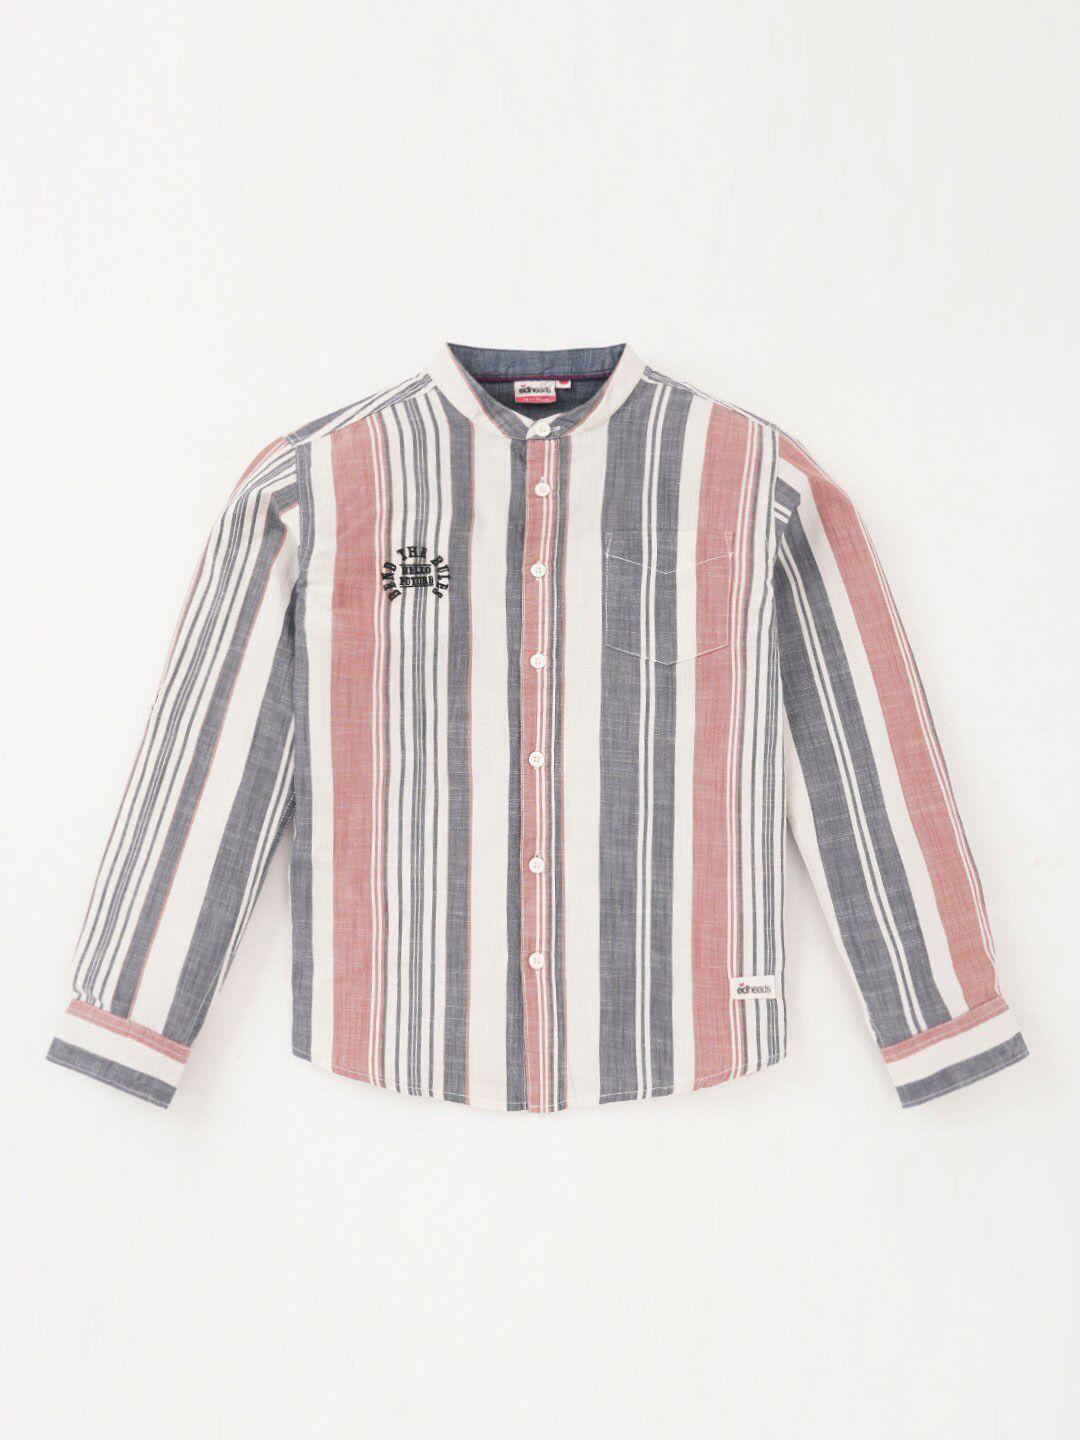 edheads boys striped cotton casual shirt